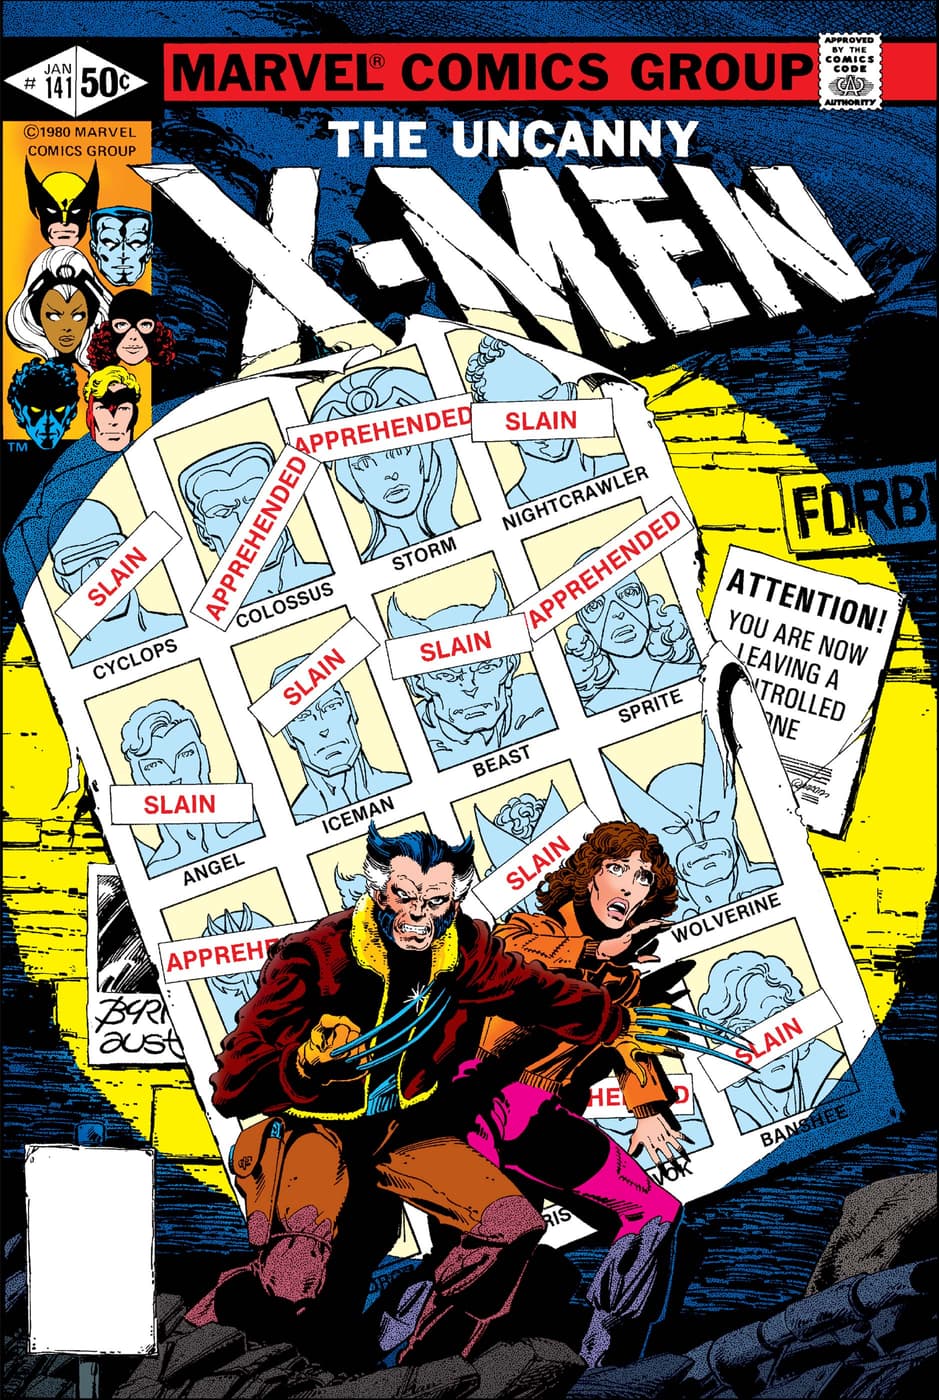 UNCANNY X-MEN (1963) #141 by Chris Claremont and John Byrne